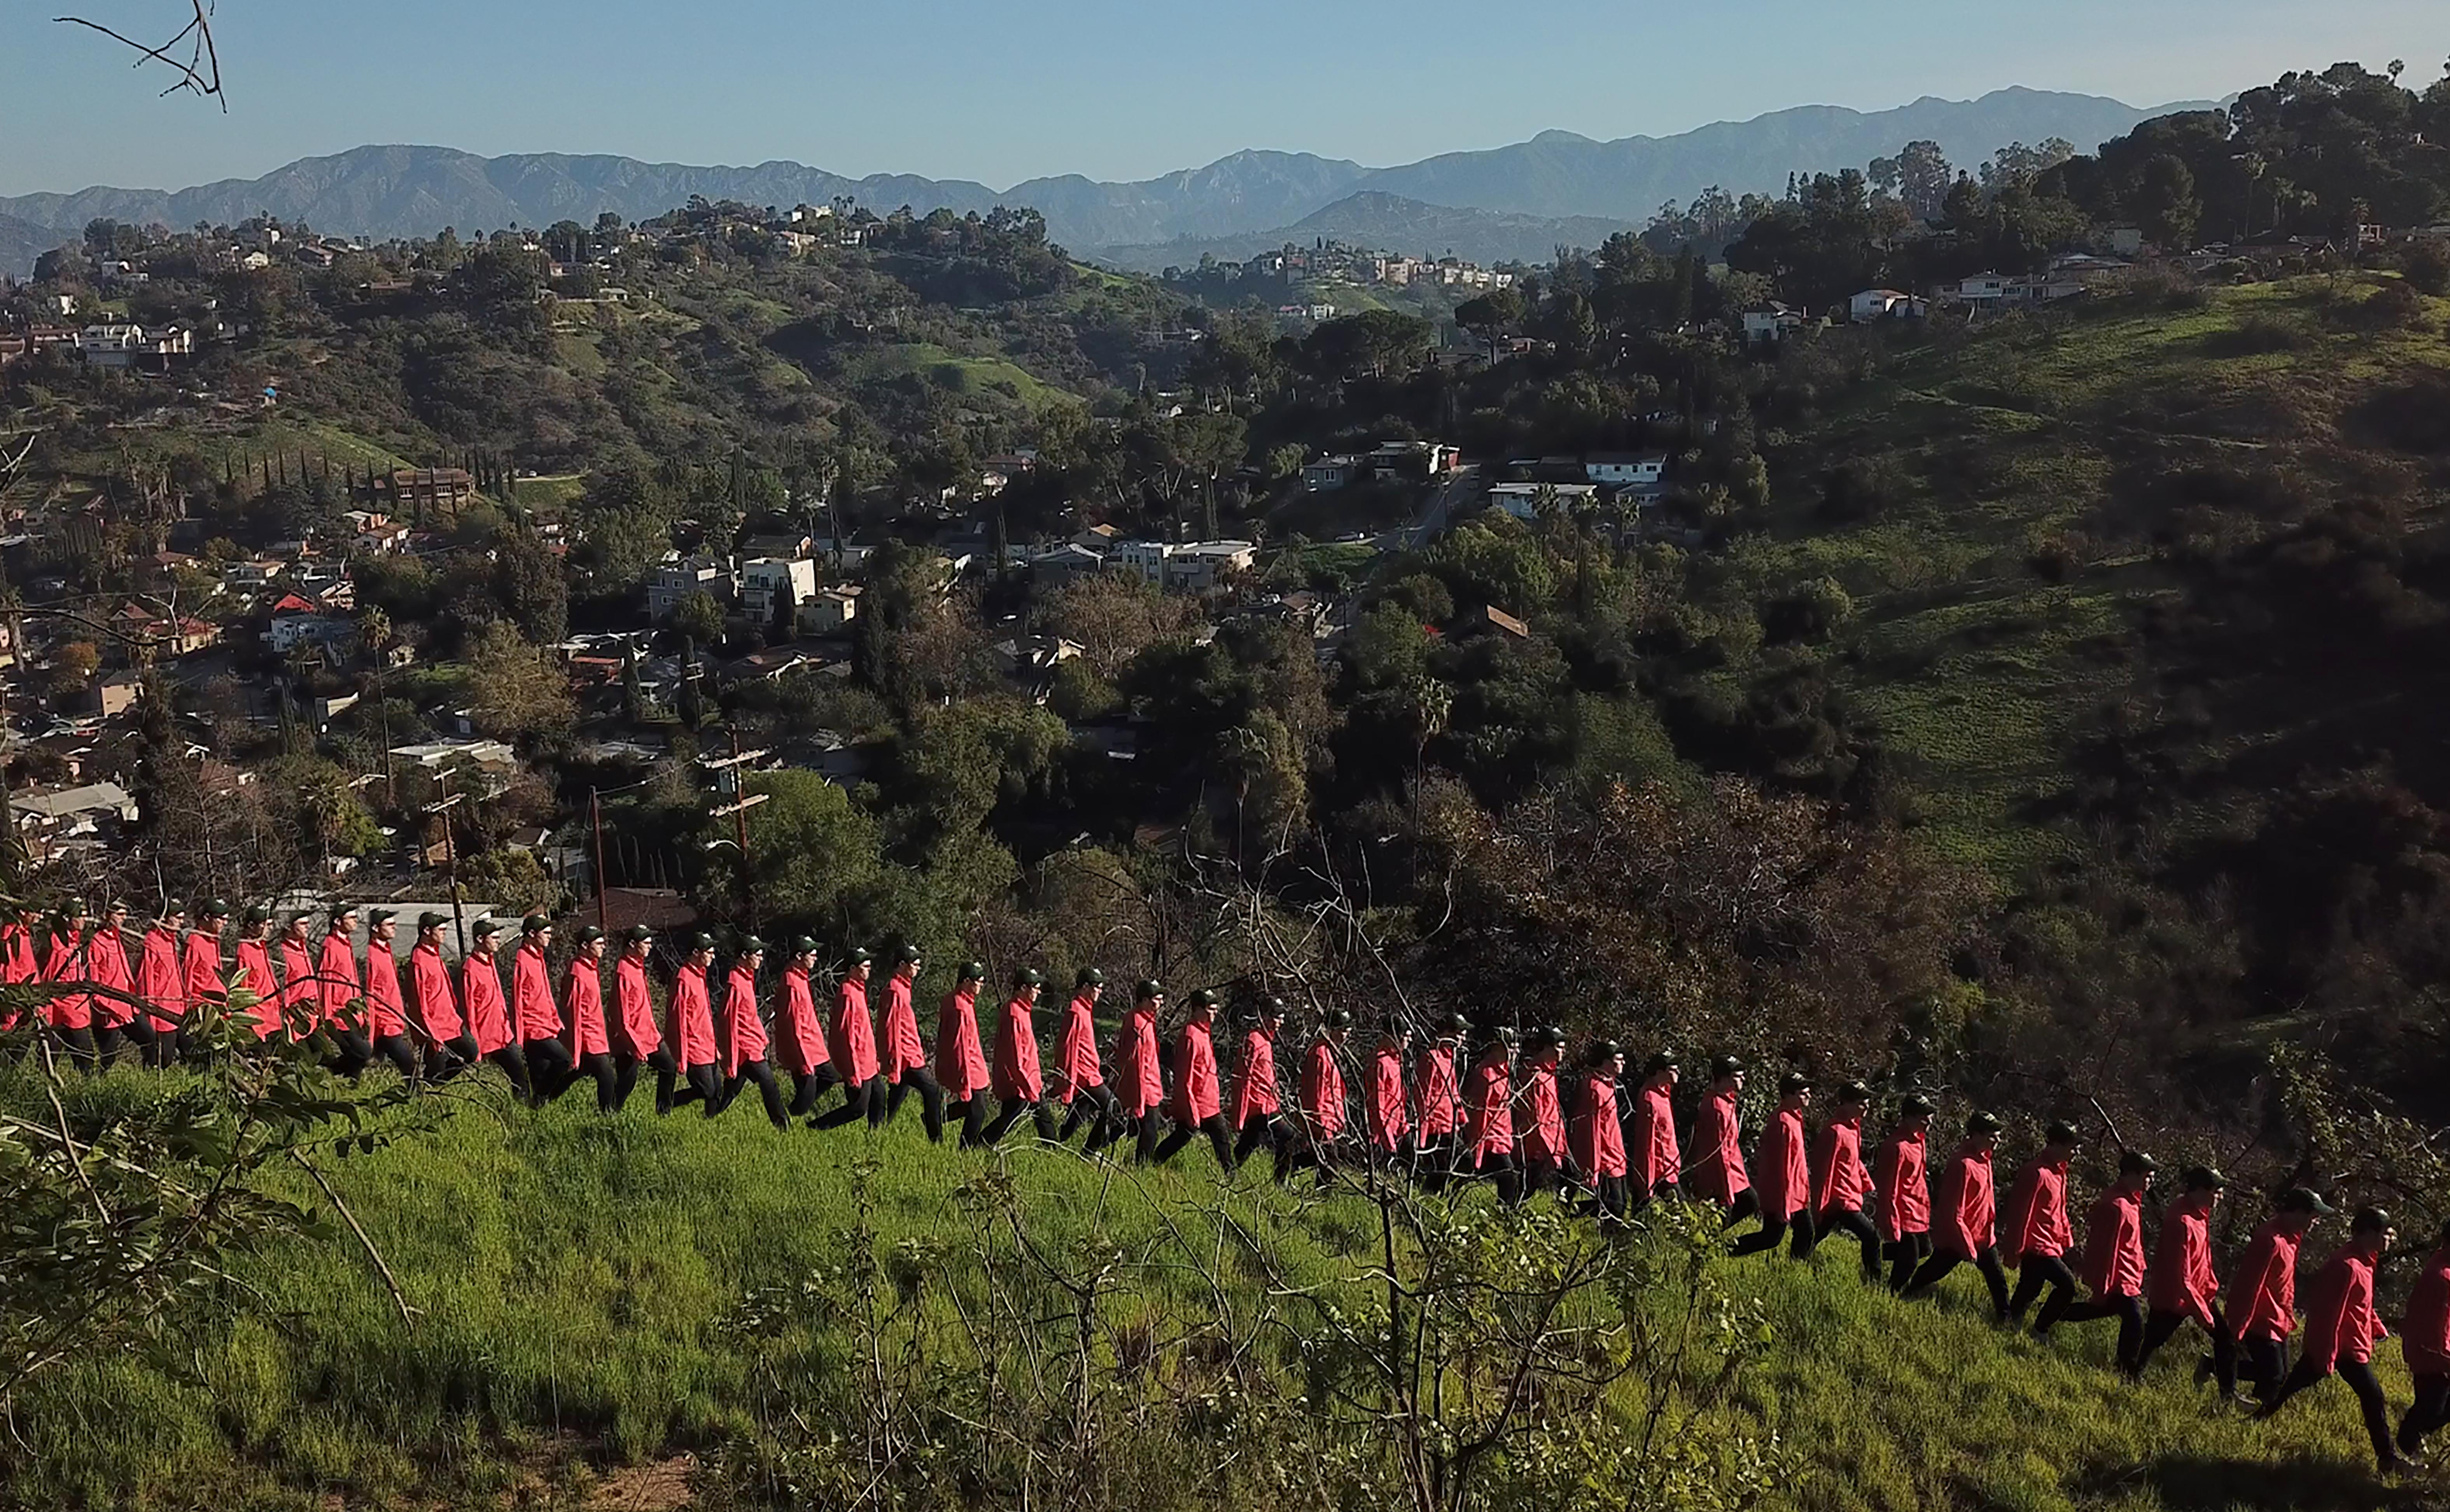 Andrew Herzog Landscape Photograph – ""Walking Line in the Hills of LA"" Figurative Landschaftsfotografie - Goldsworthy